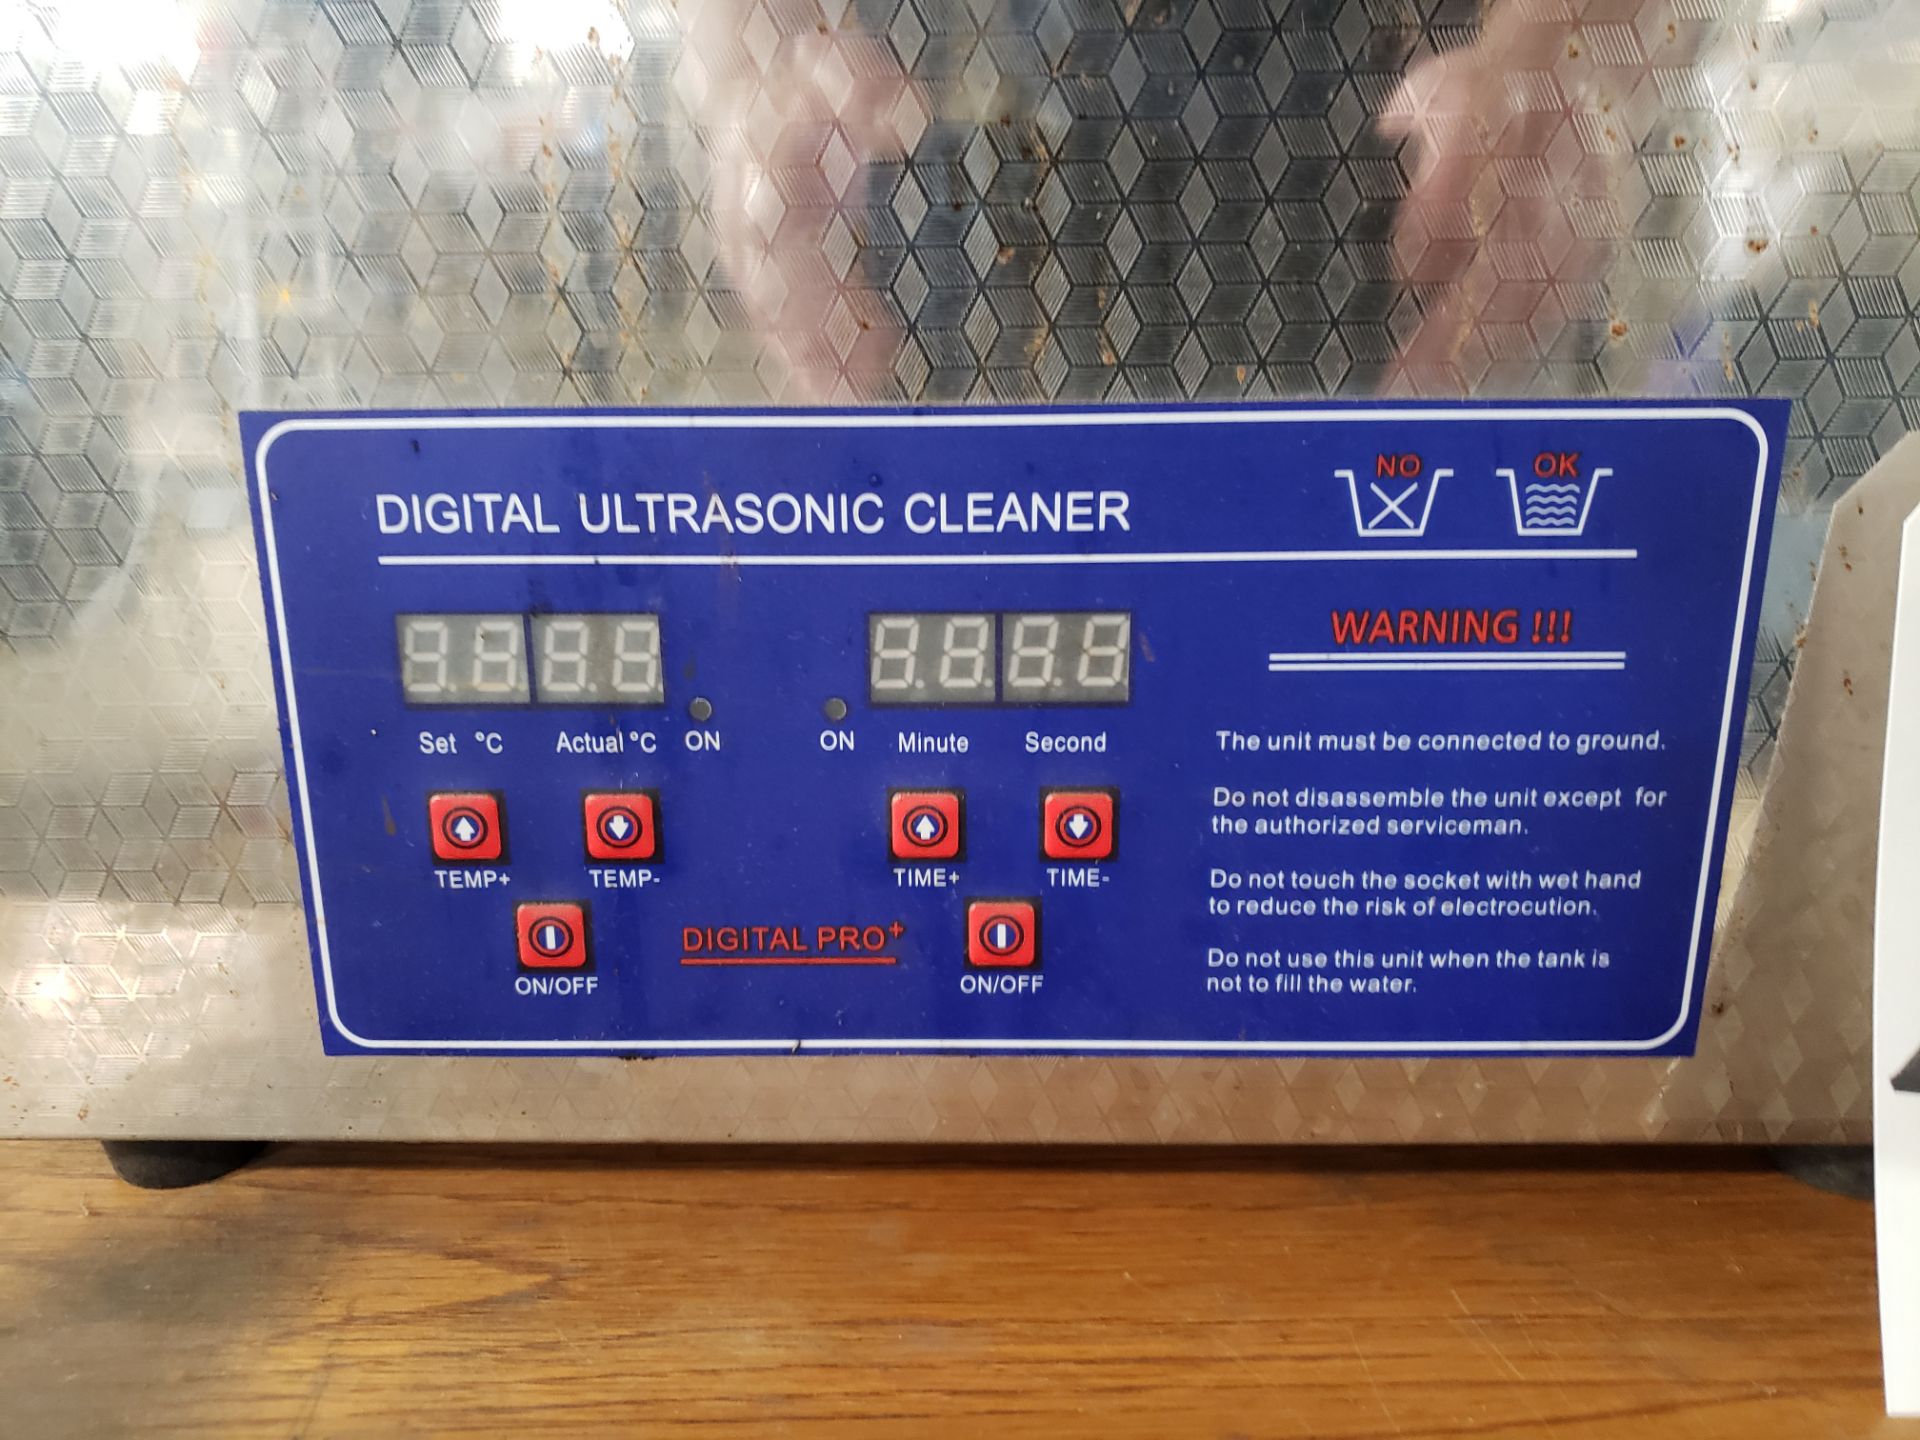 Digital Ultrasonic Cleaner | Rig Fee $25 - Image 2 of 2